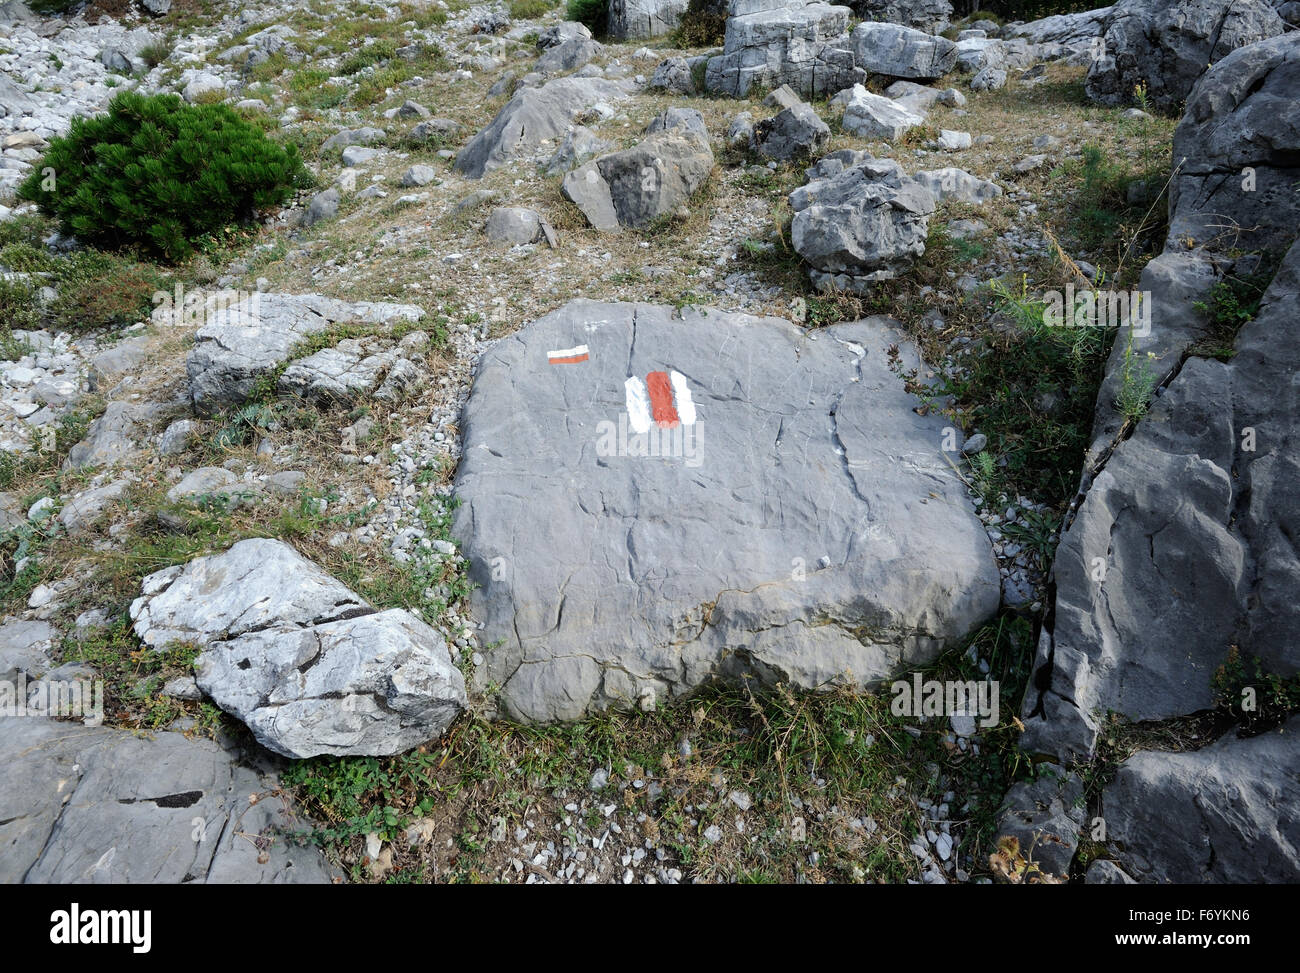 Un panneau de signalisation sur le chemin entre l'Quku Valbones j, Rilindja et Valbona Qender . Valbone, Valbona, Albanie. 06Sep15 Banque D'Images